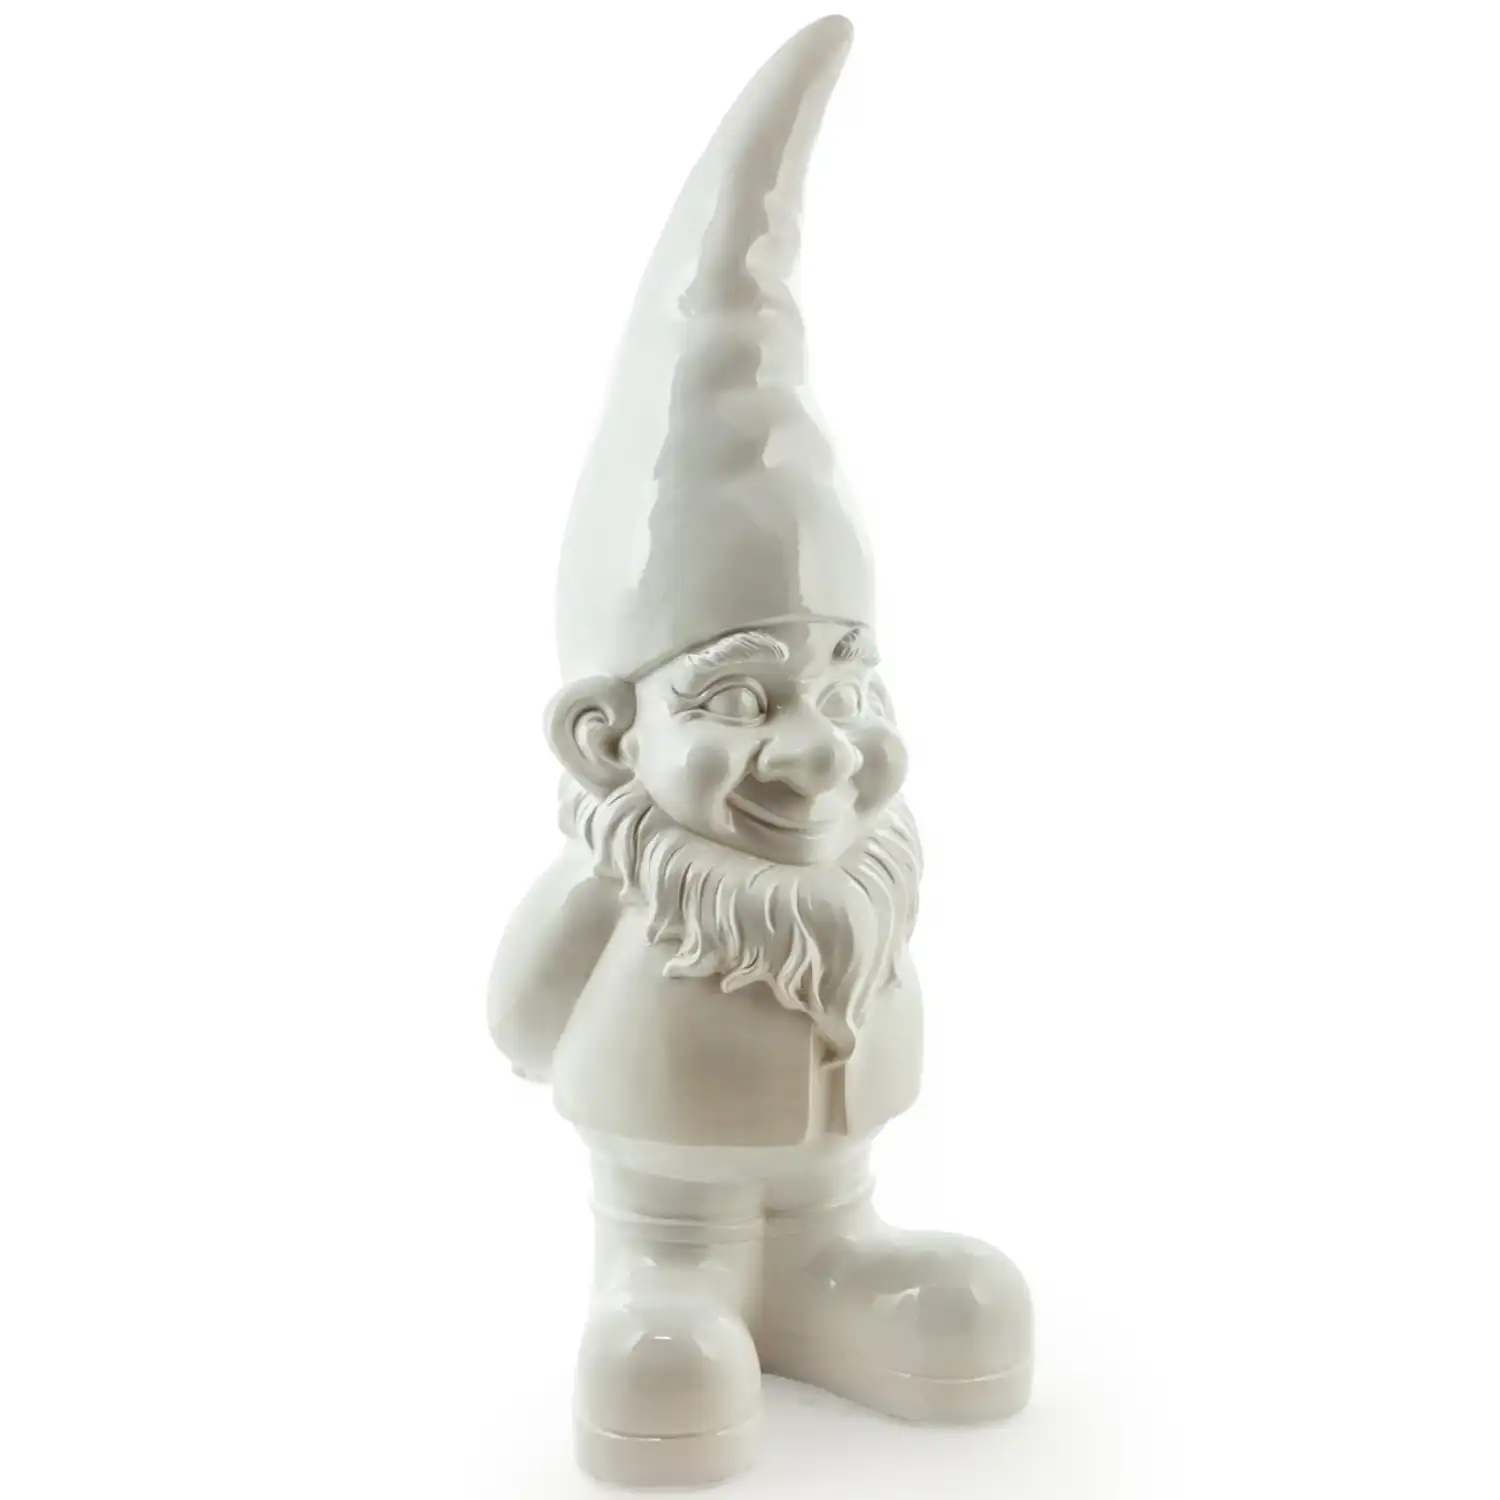 Giant White Standing Gnome Figure